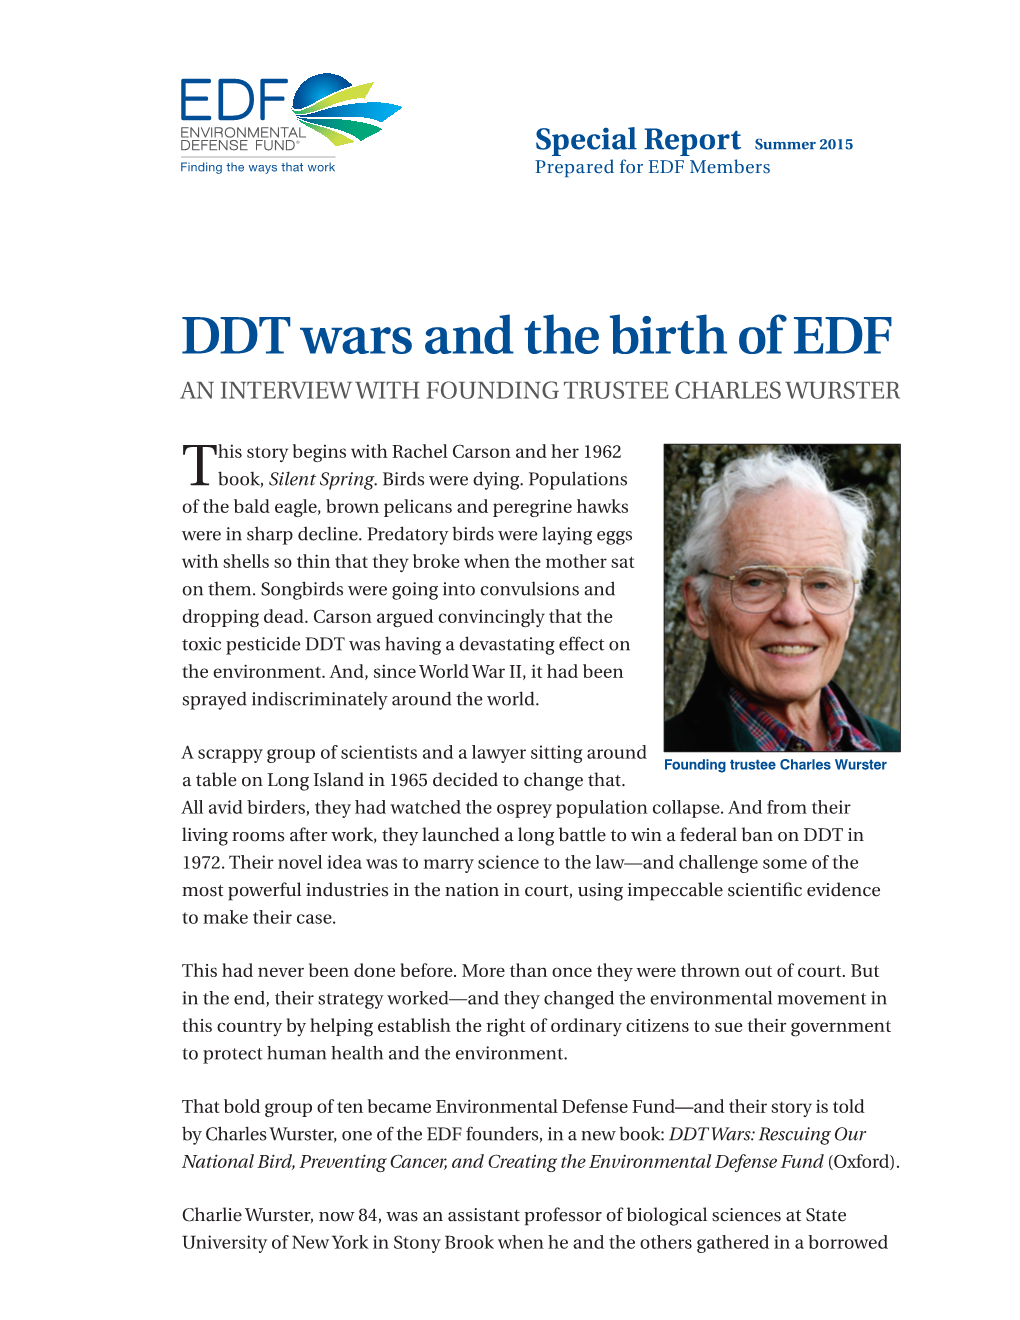 DDT Wars and the Birth of EDF [PDF]